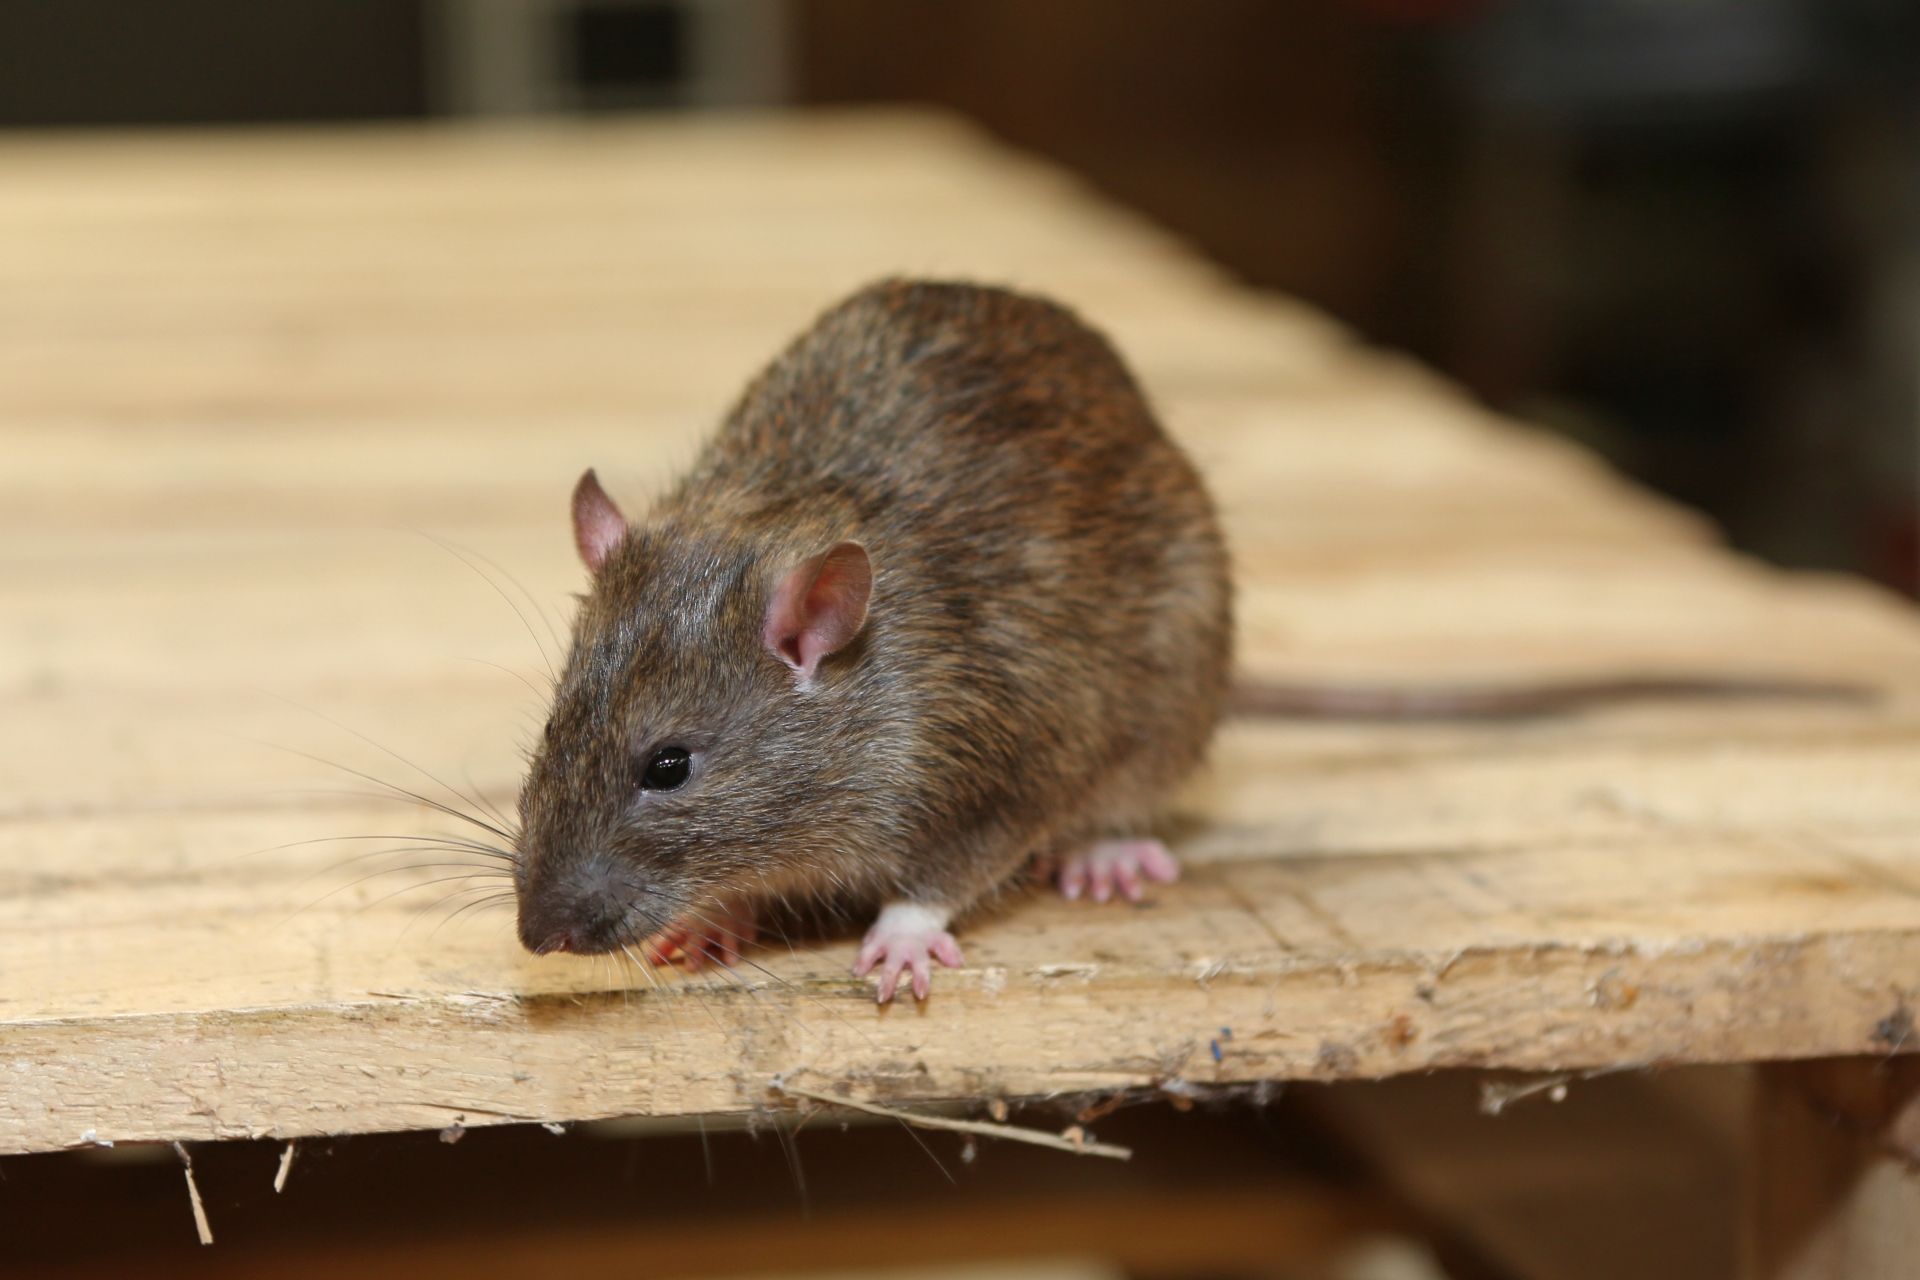 Rat extermination, Pest Control in Wimbledon, SW19. Call Now 020 8166 9746